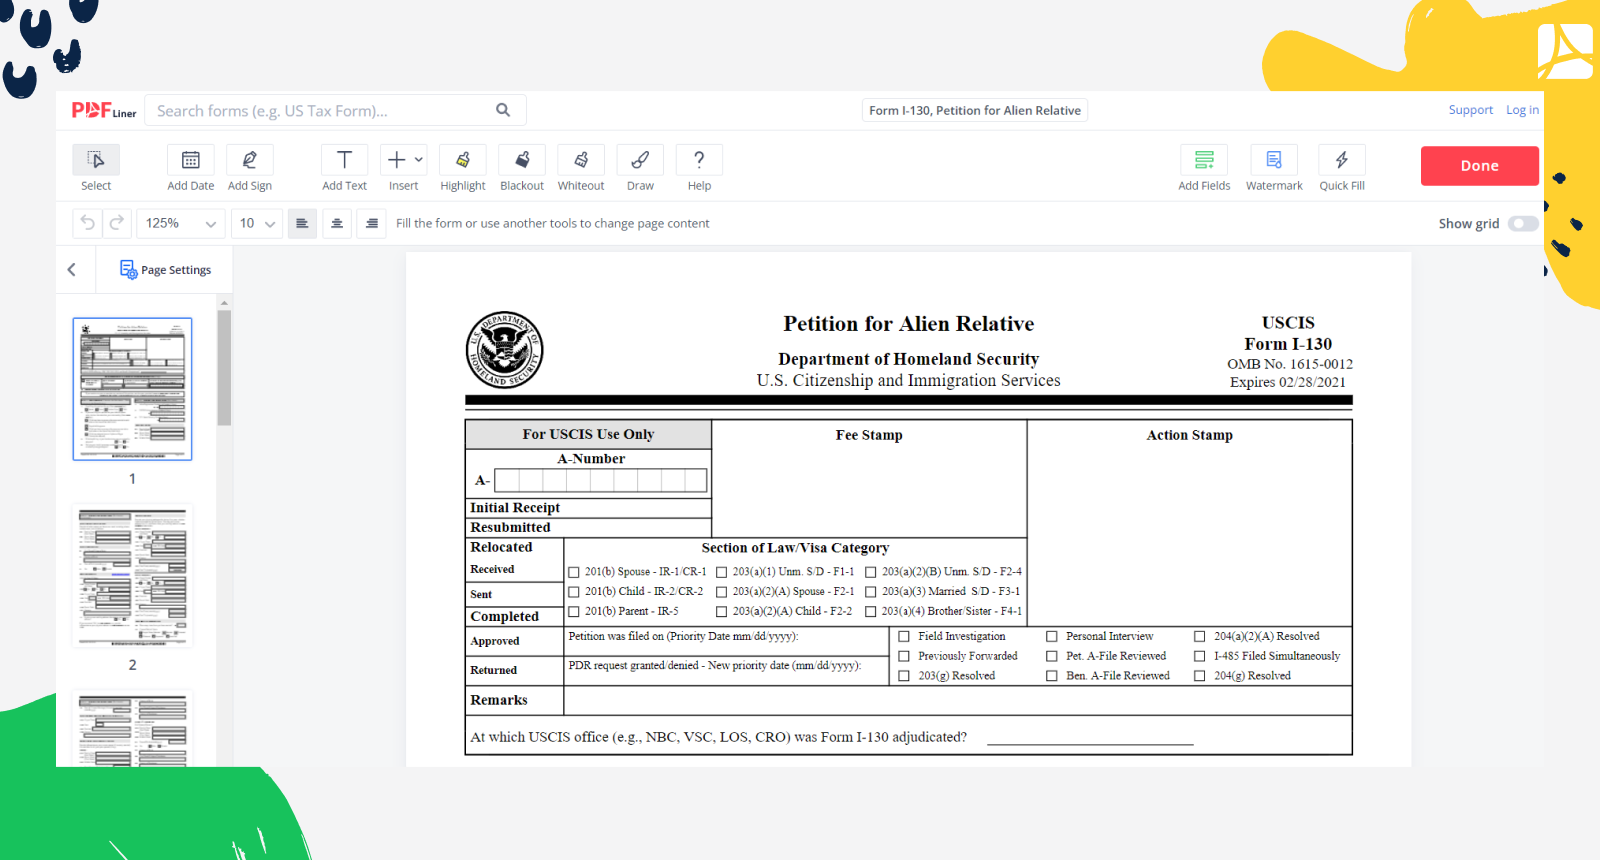 USCIS Form I-130 on PDFLiner